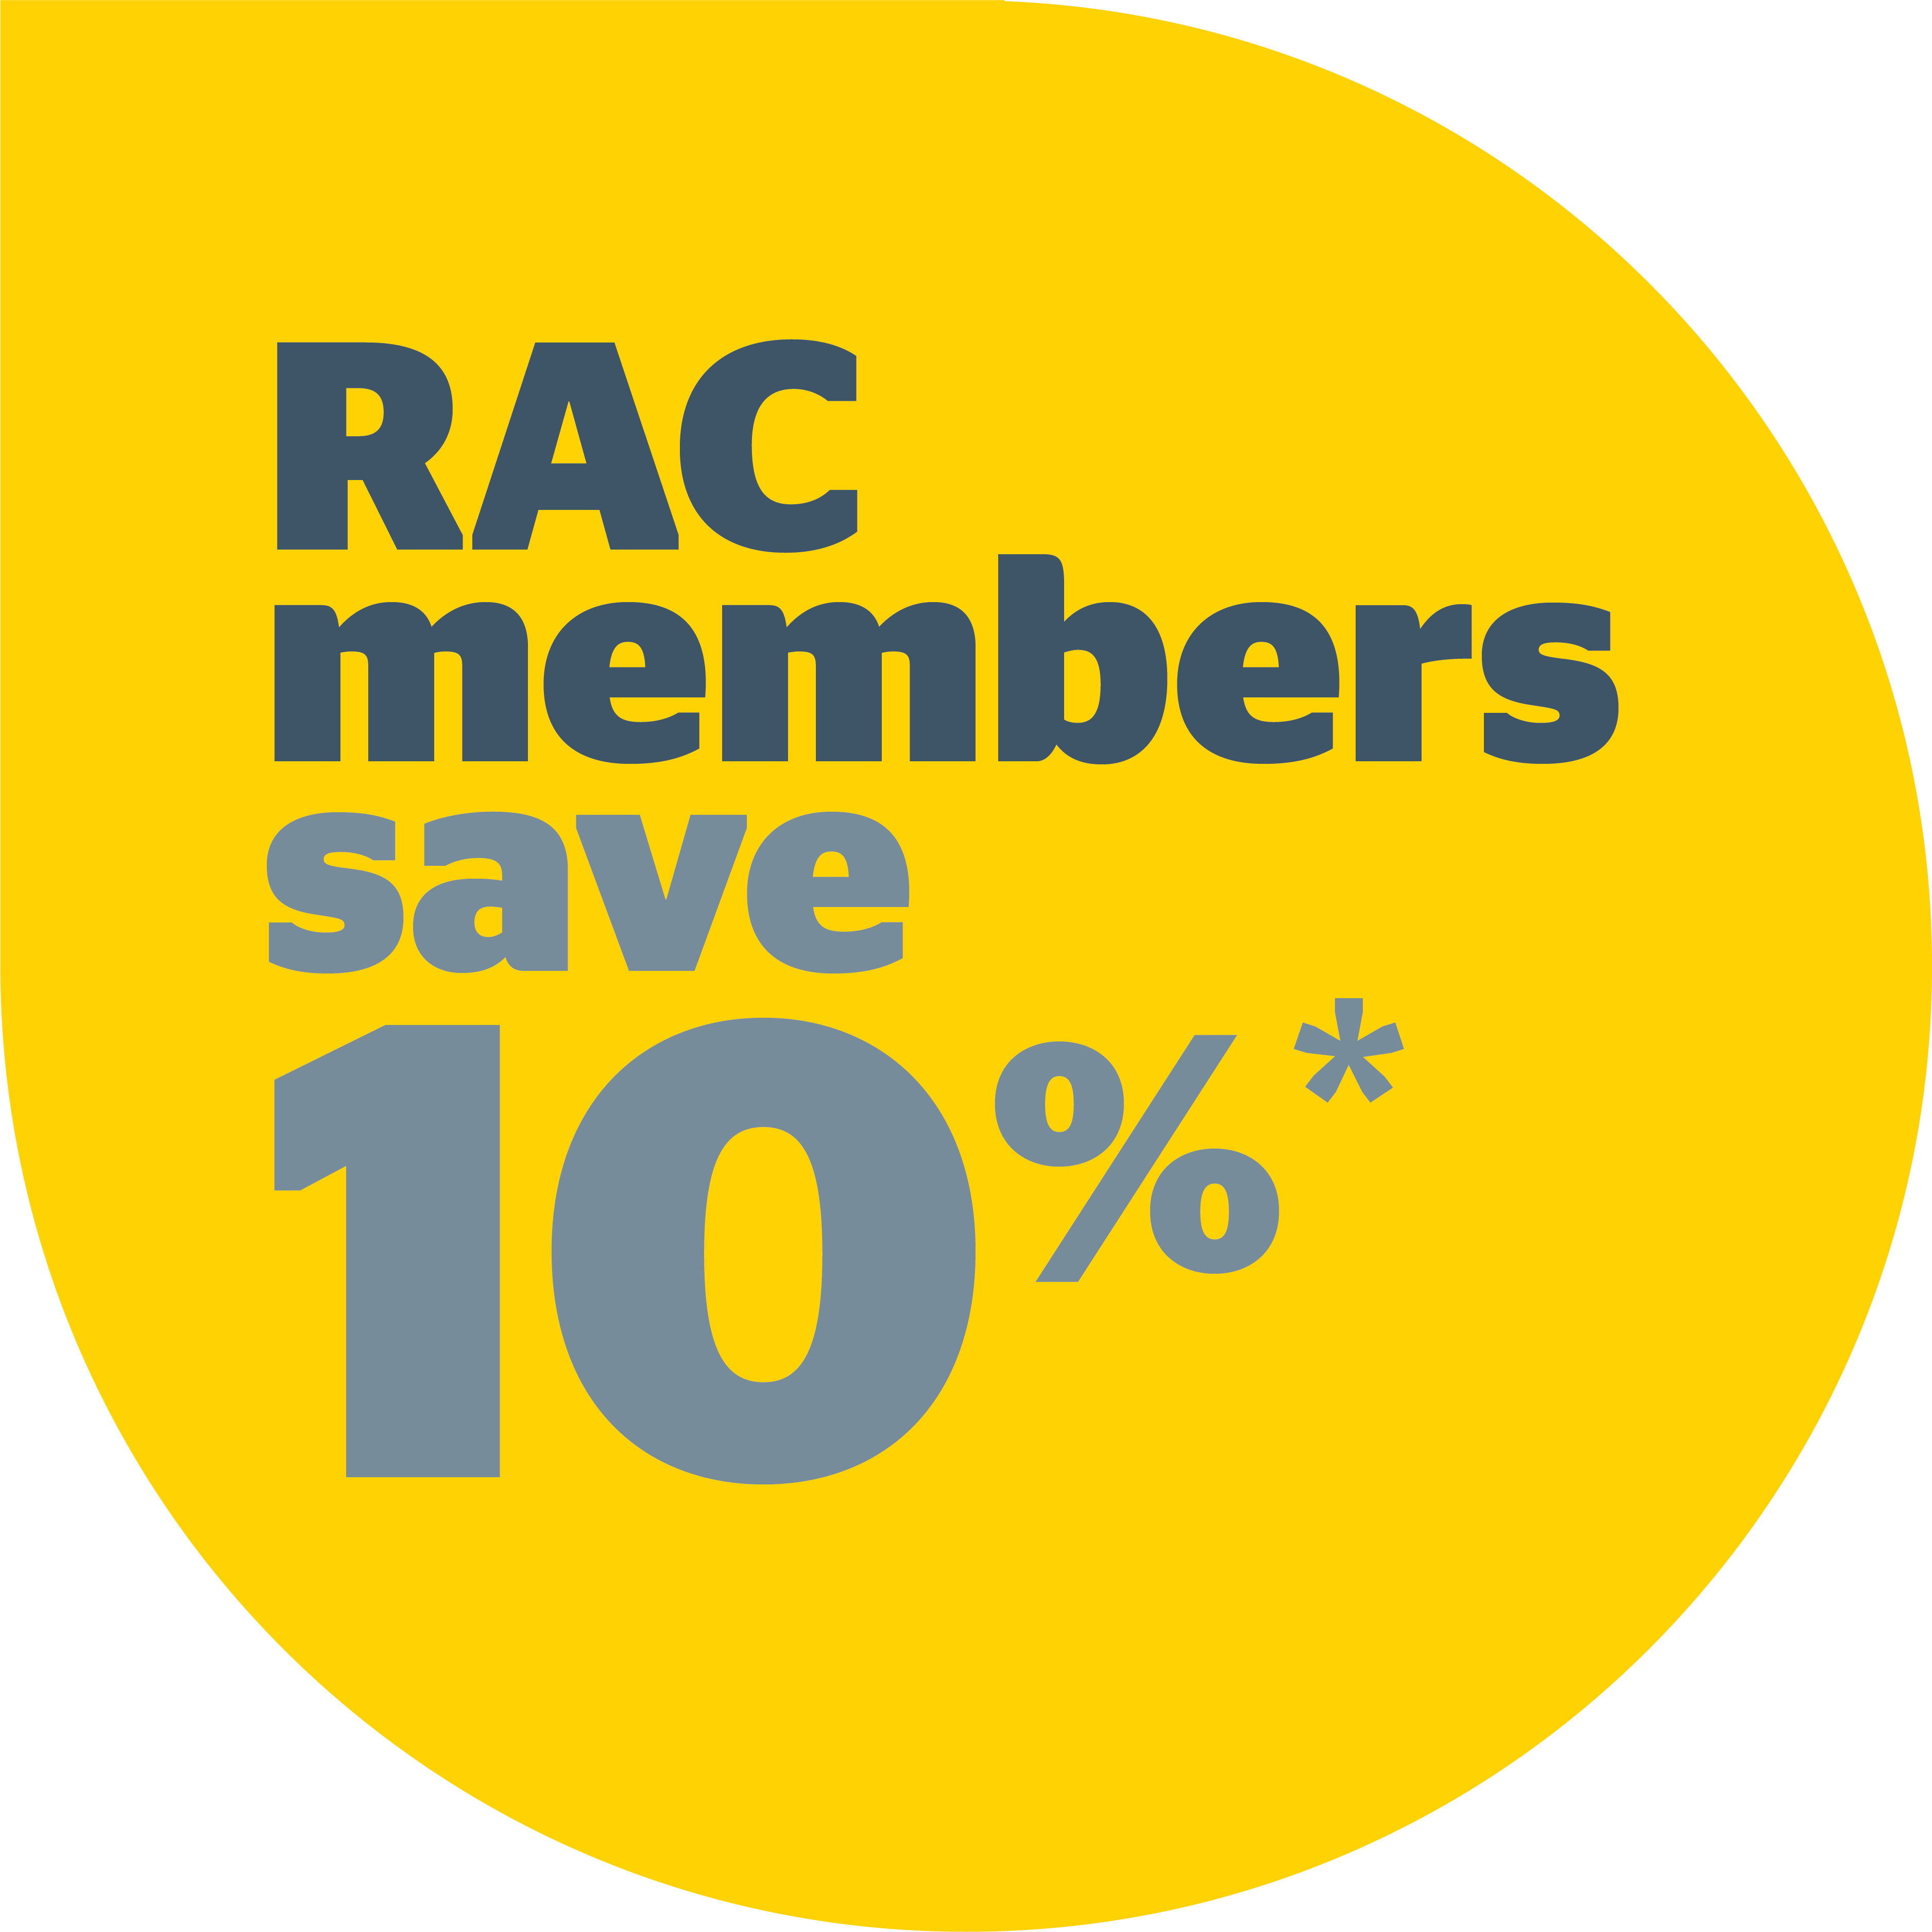 RAC members save 10% on our Marine Life cruises